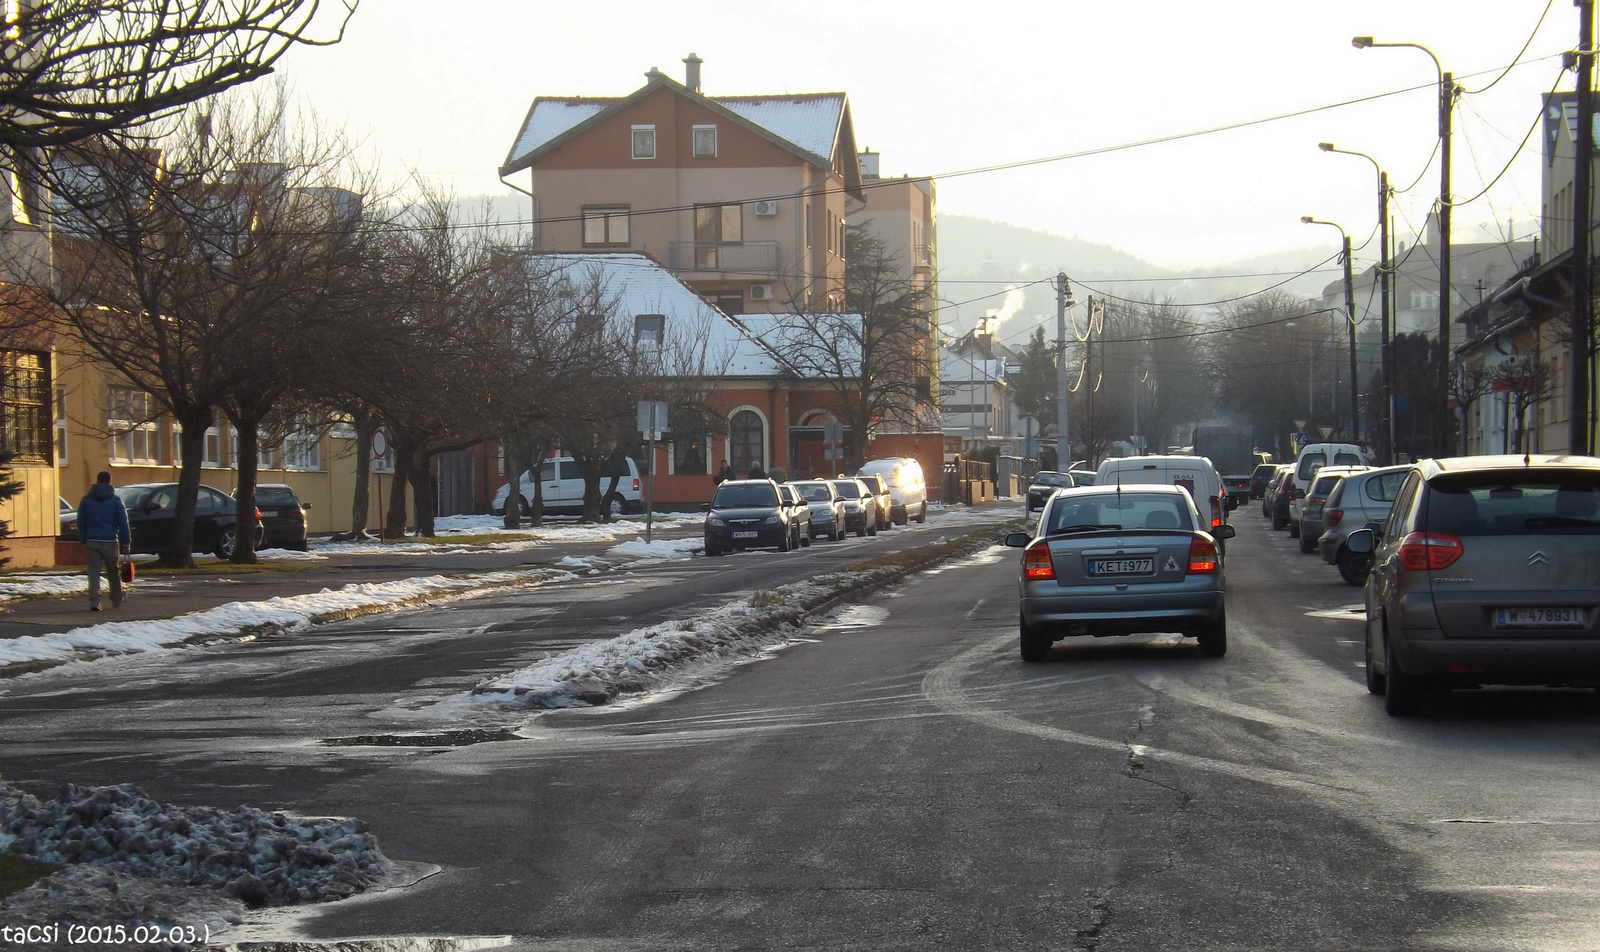 Ferenczy János utca vége